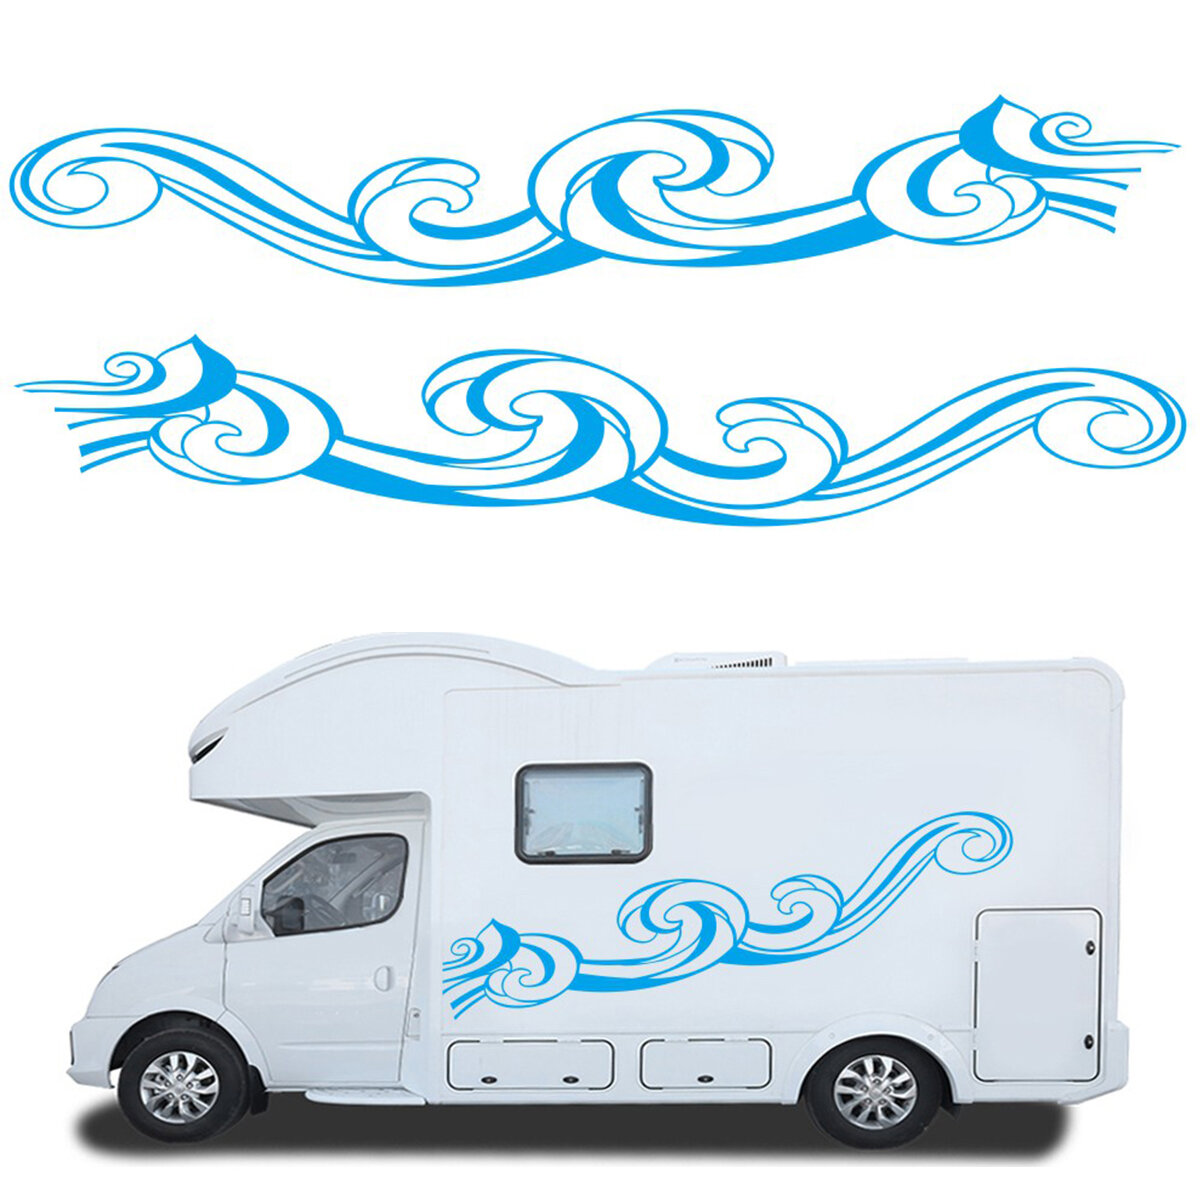 Motorhome Graphics Stickers For Car Camper Van Motorhome Caravan